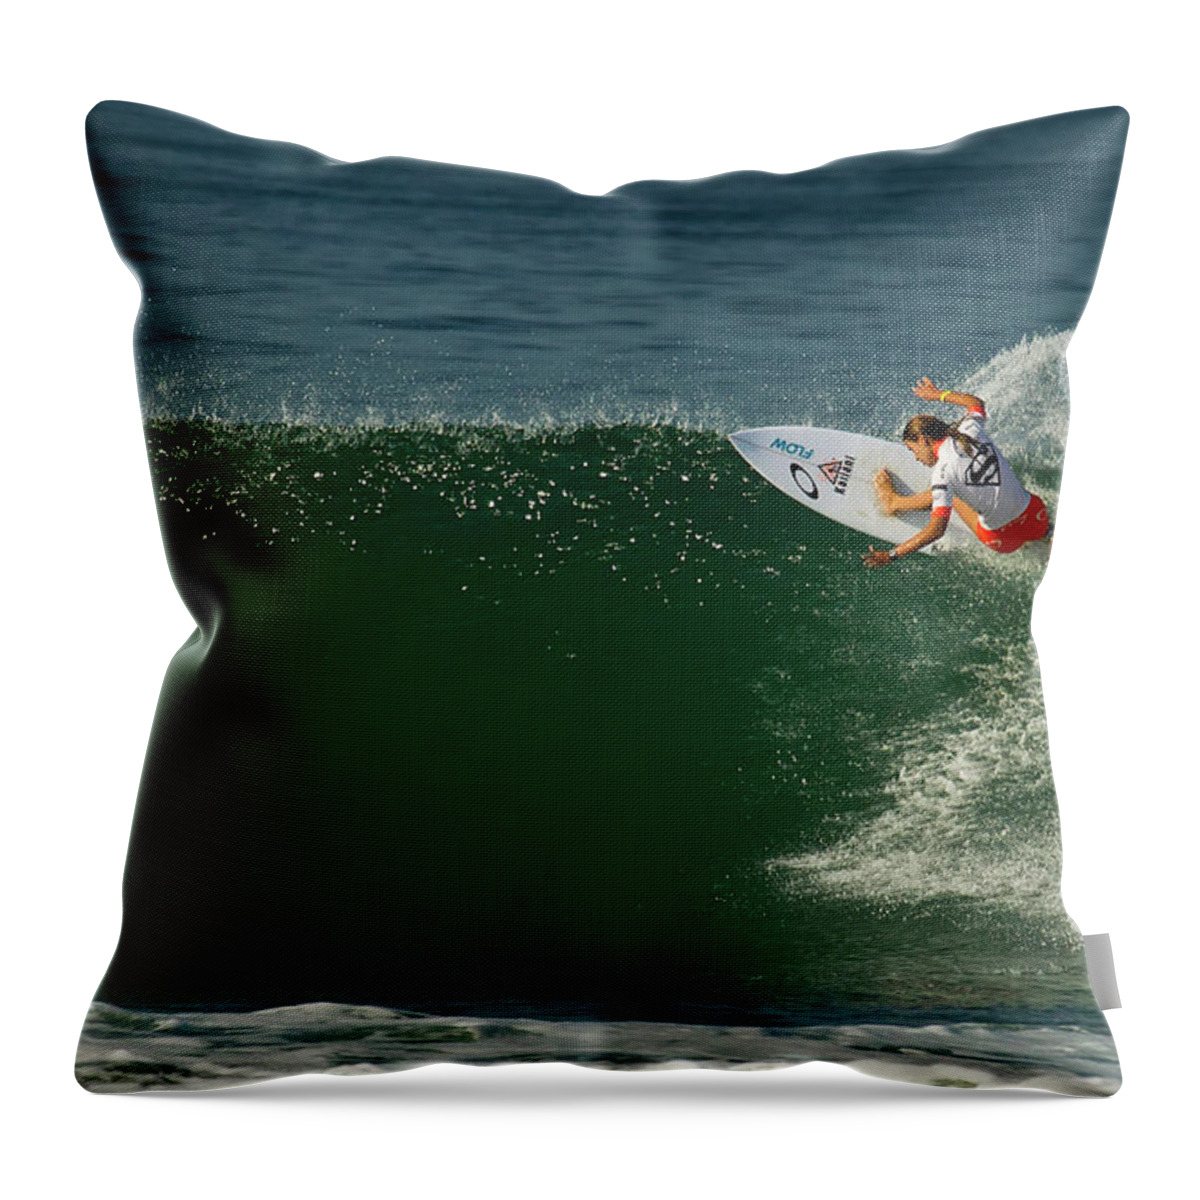 Chelsea Roett Throw Pillow featuring the photograph Chelsea Roett BRB by Waterdancer